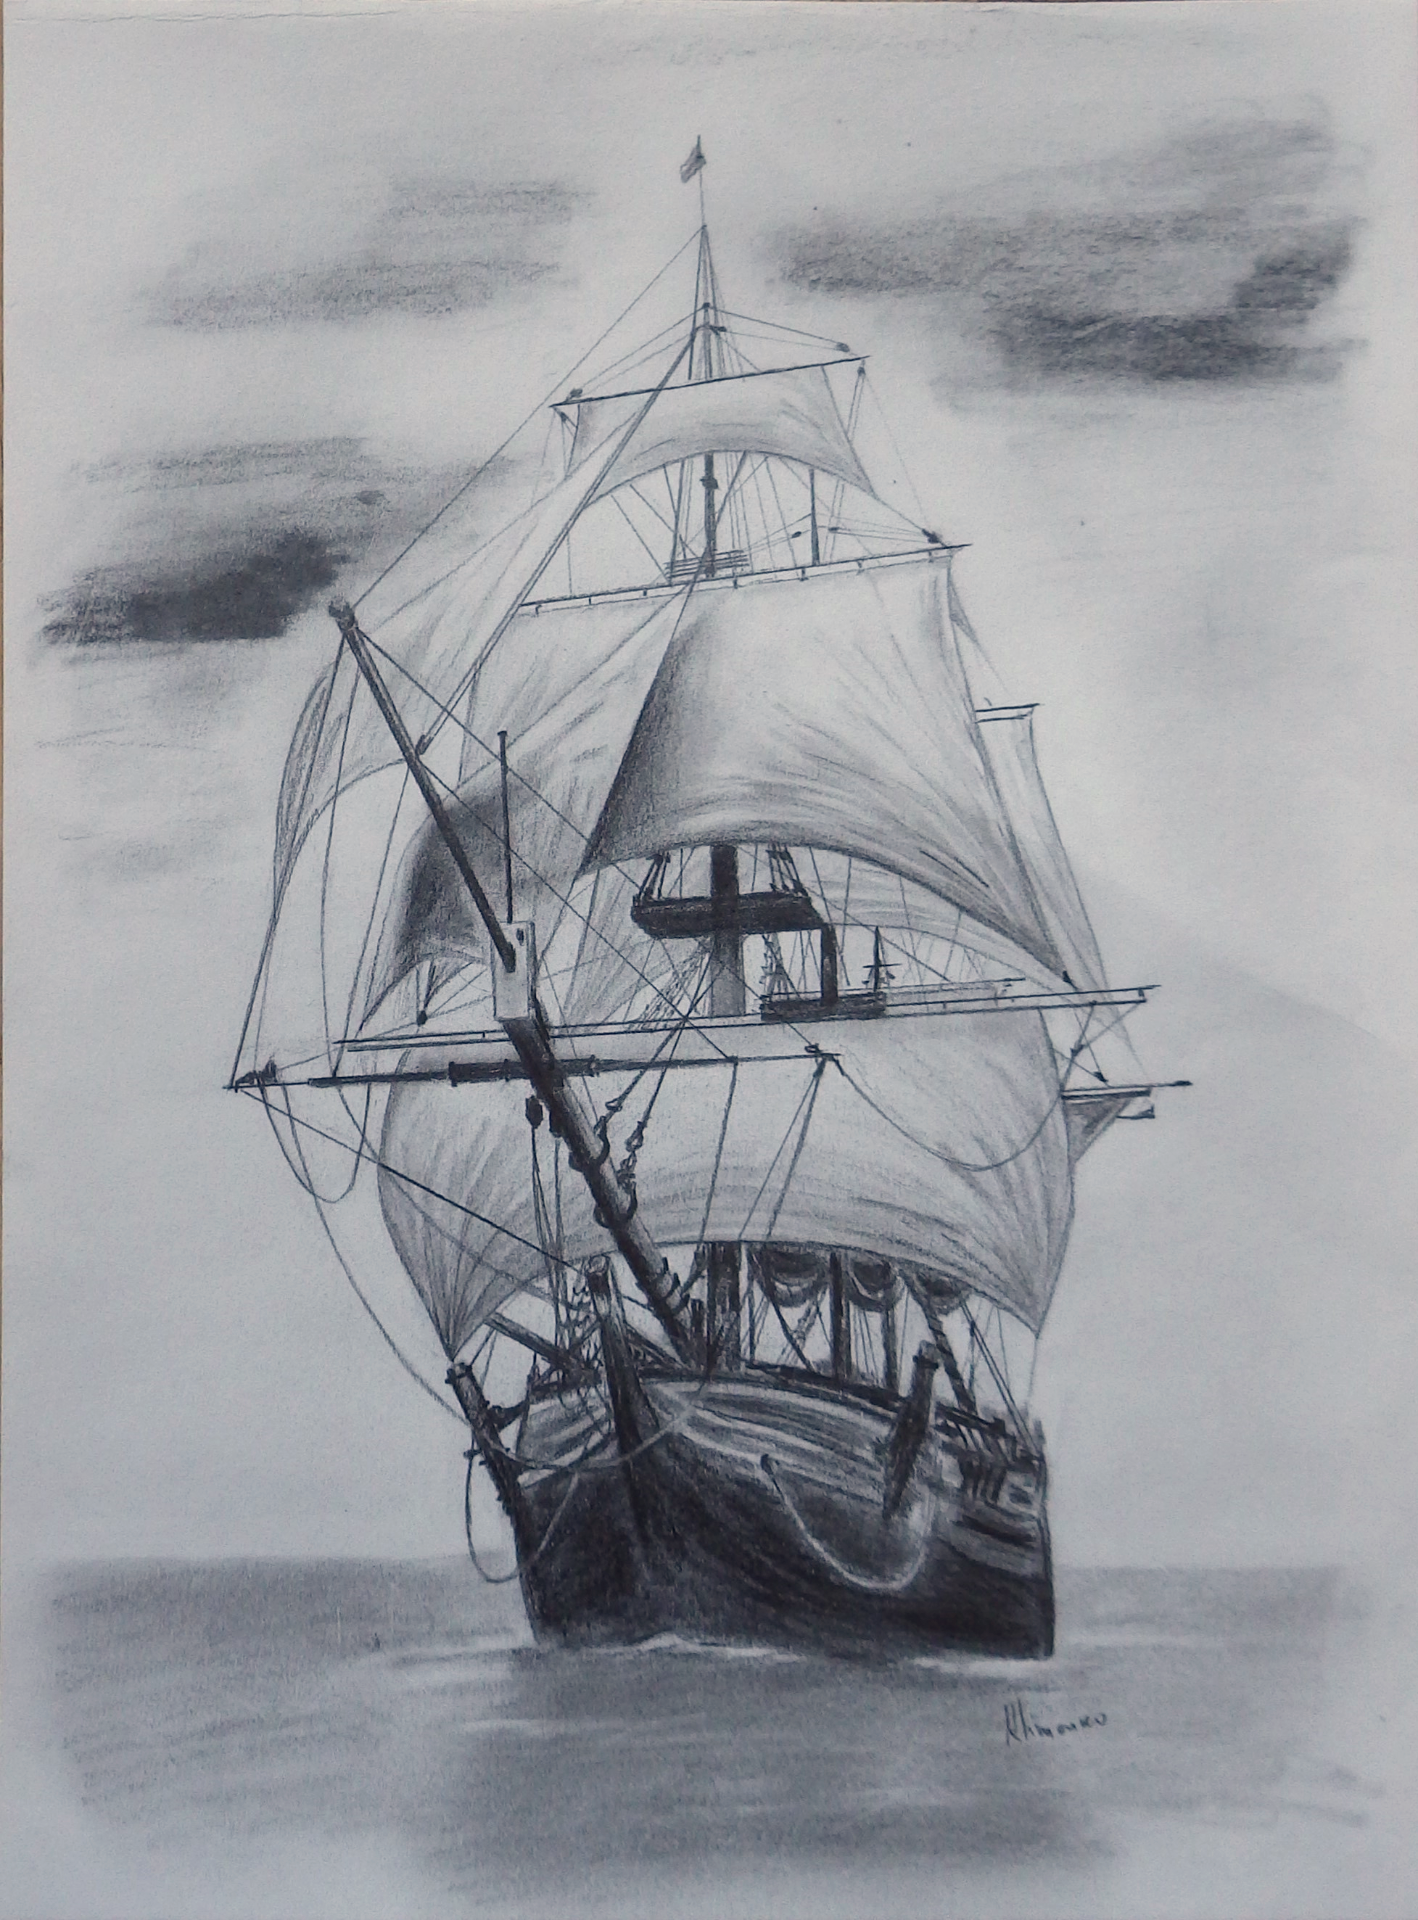 Sailing Ship Drawing at Explore collection of